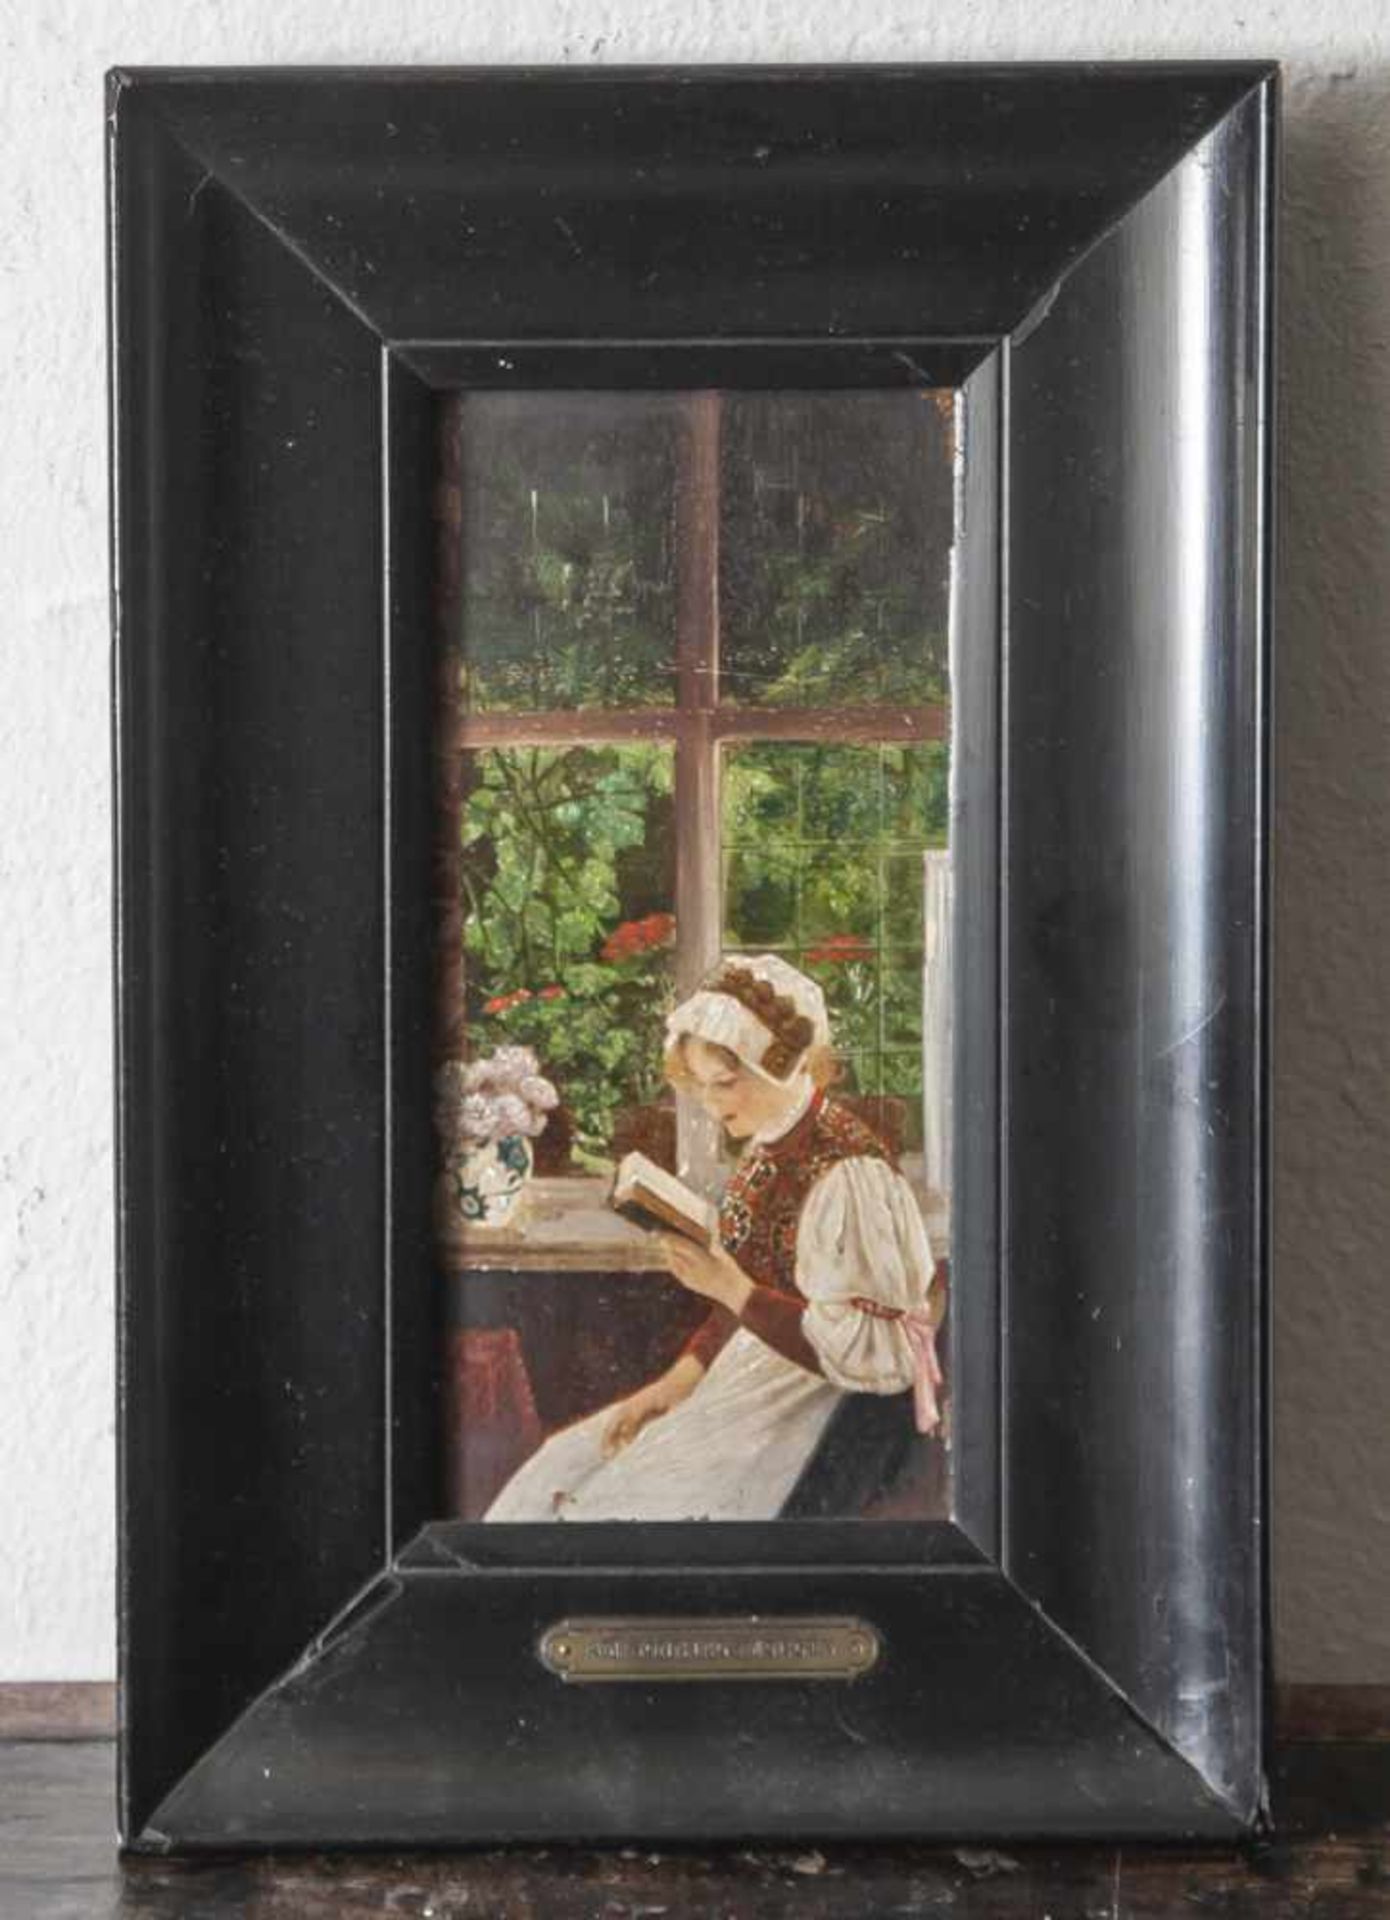 Unbekannter Maler (um 1900), Junge Frau am Fenster ein Buch lesend, Öl/Holz, bez. "Am